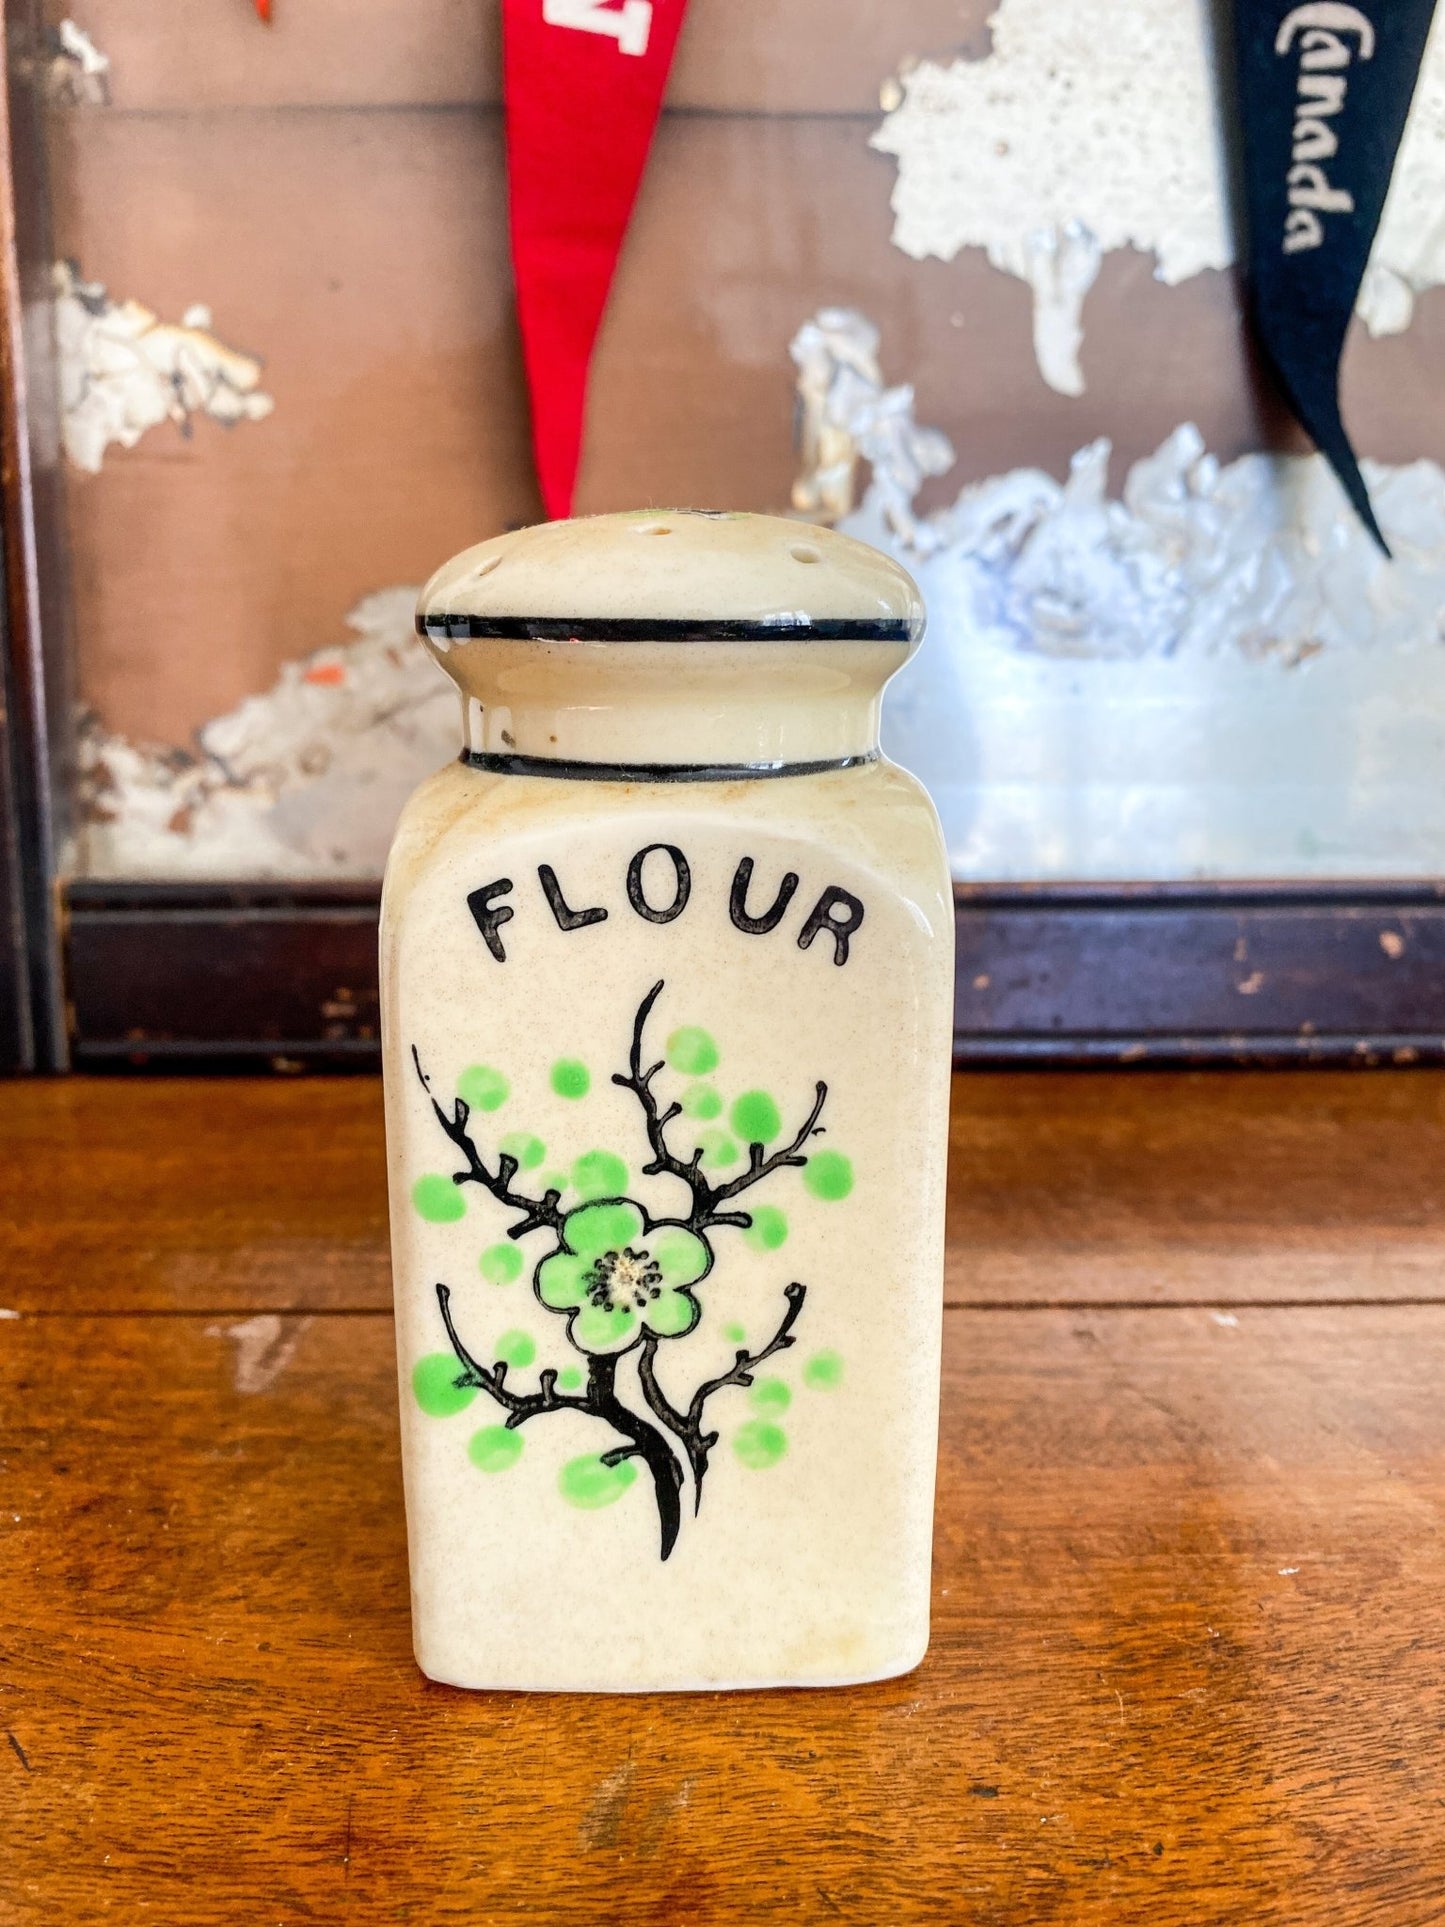 Vintage Moriyama Flour and Pepper Shakers - Perth Market